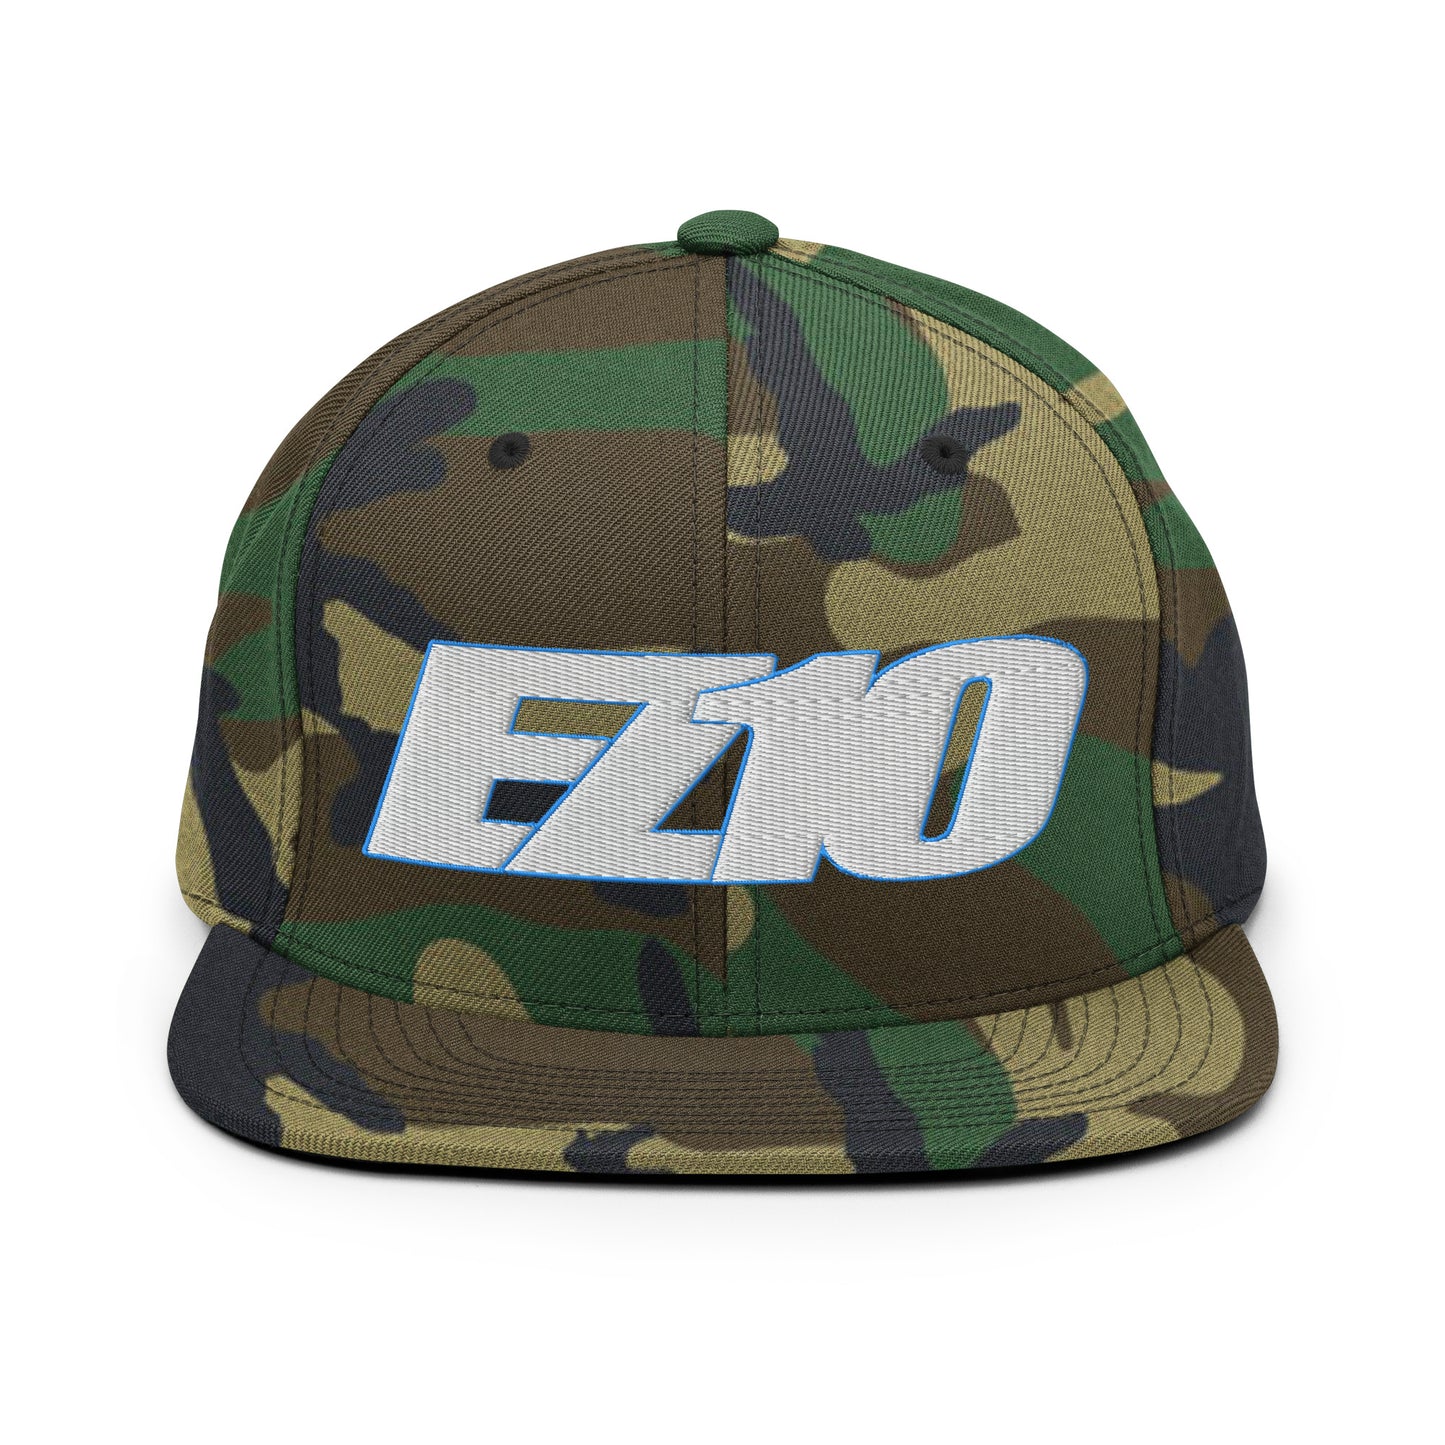 EZ10 Snapback Hat